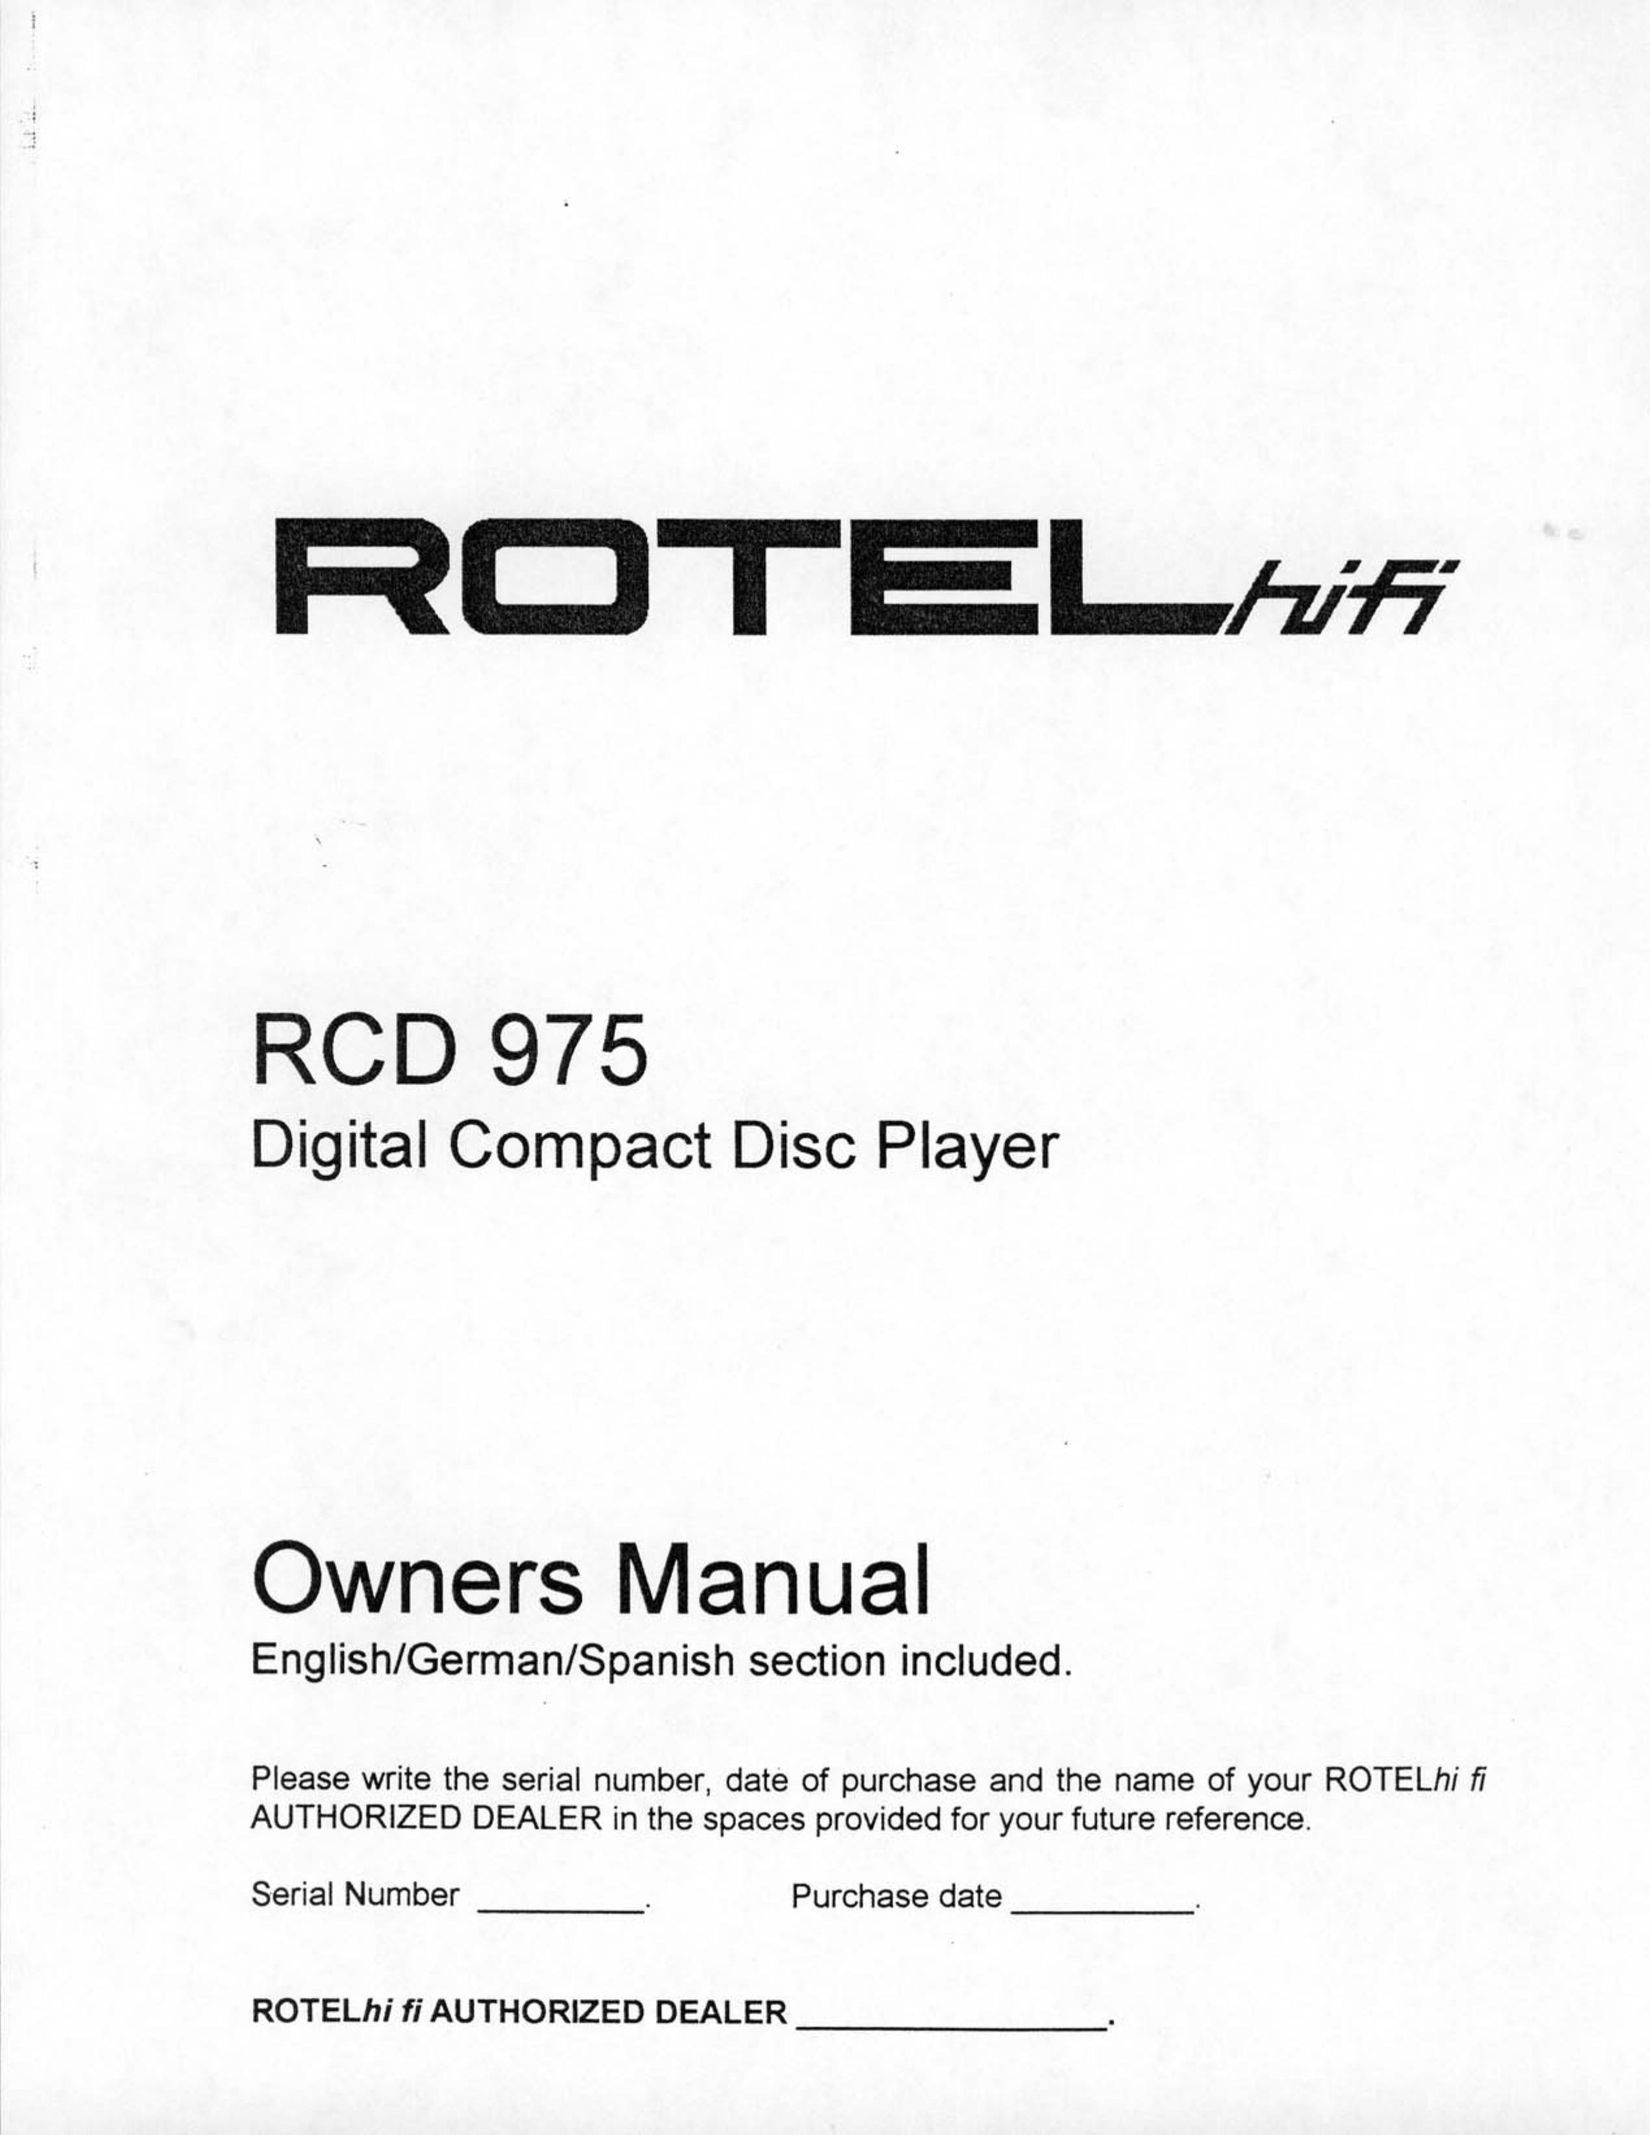 Rotel RCD 975 CD Player User Manual